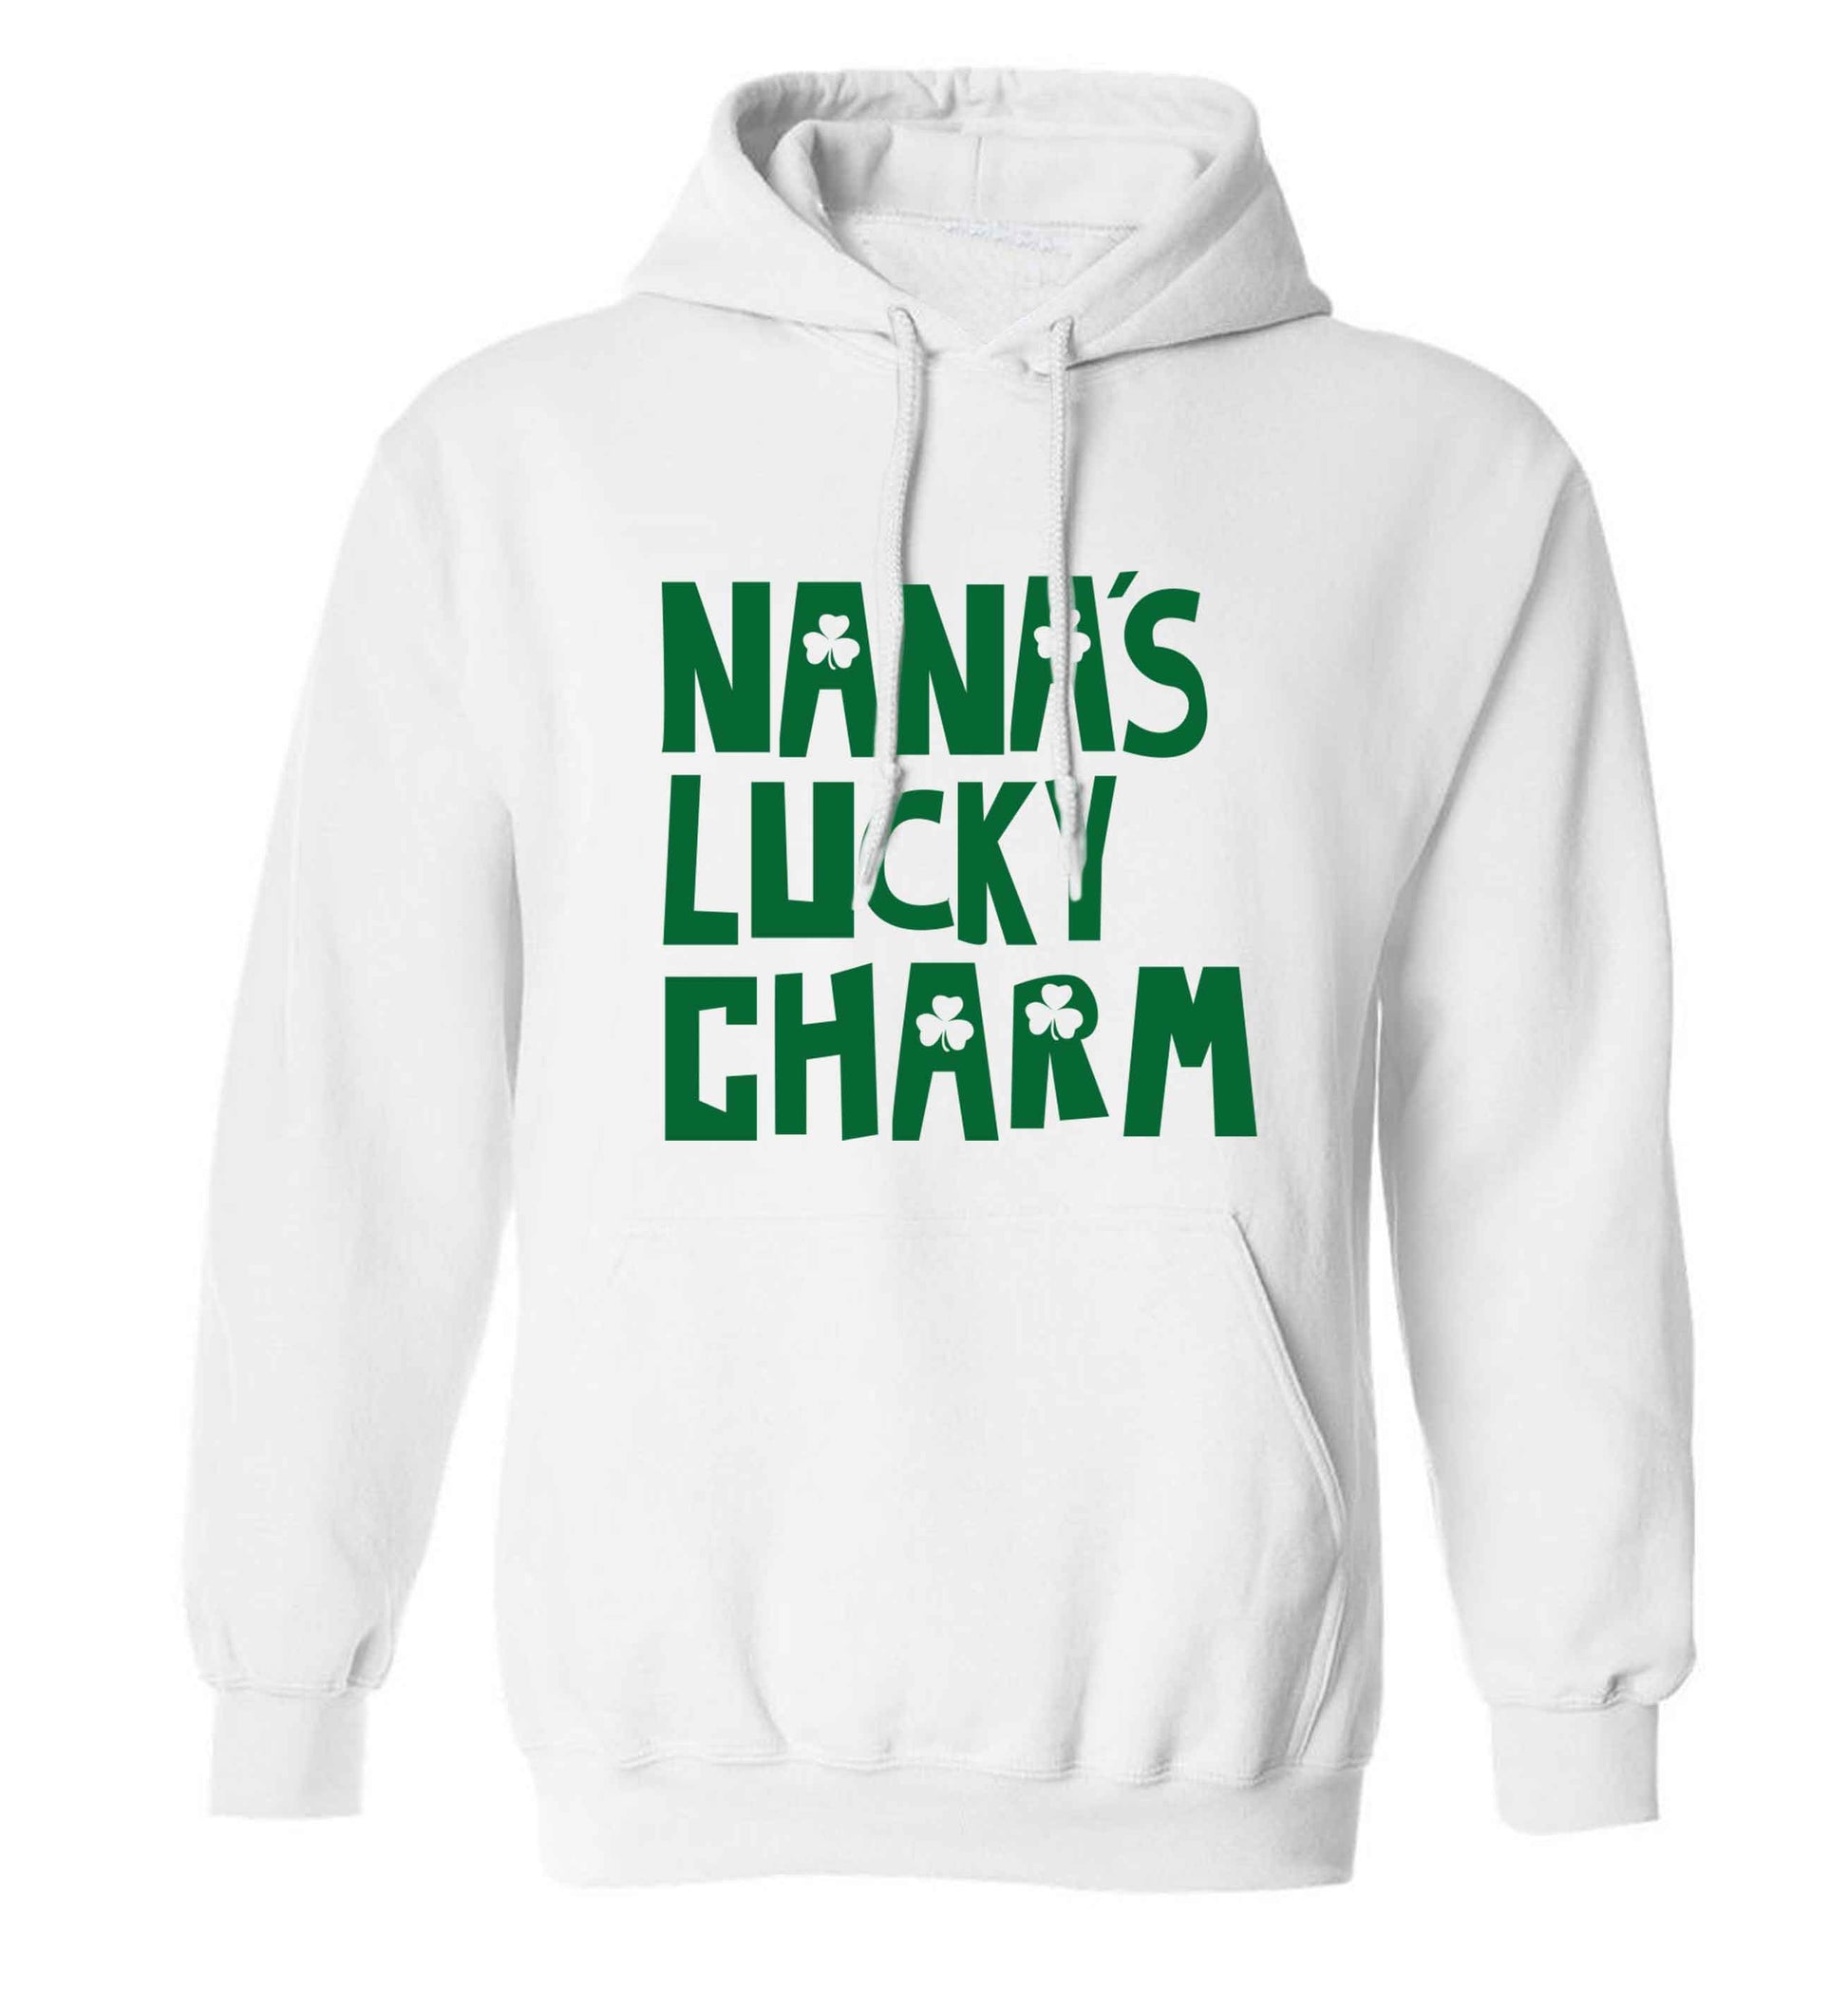 Nana's lucky charm adults unisex white hoodie 2XL